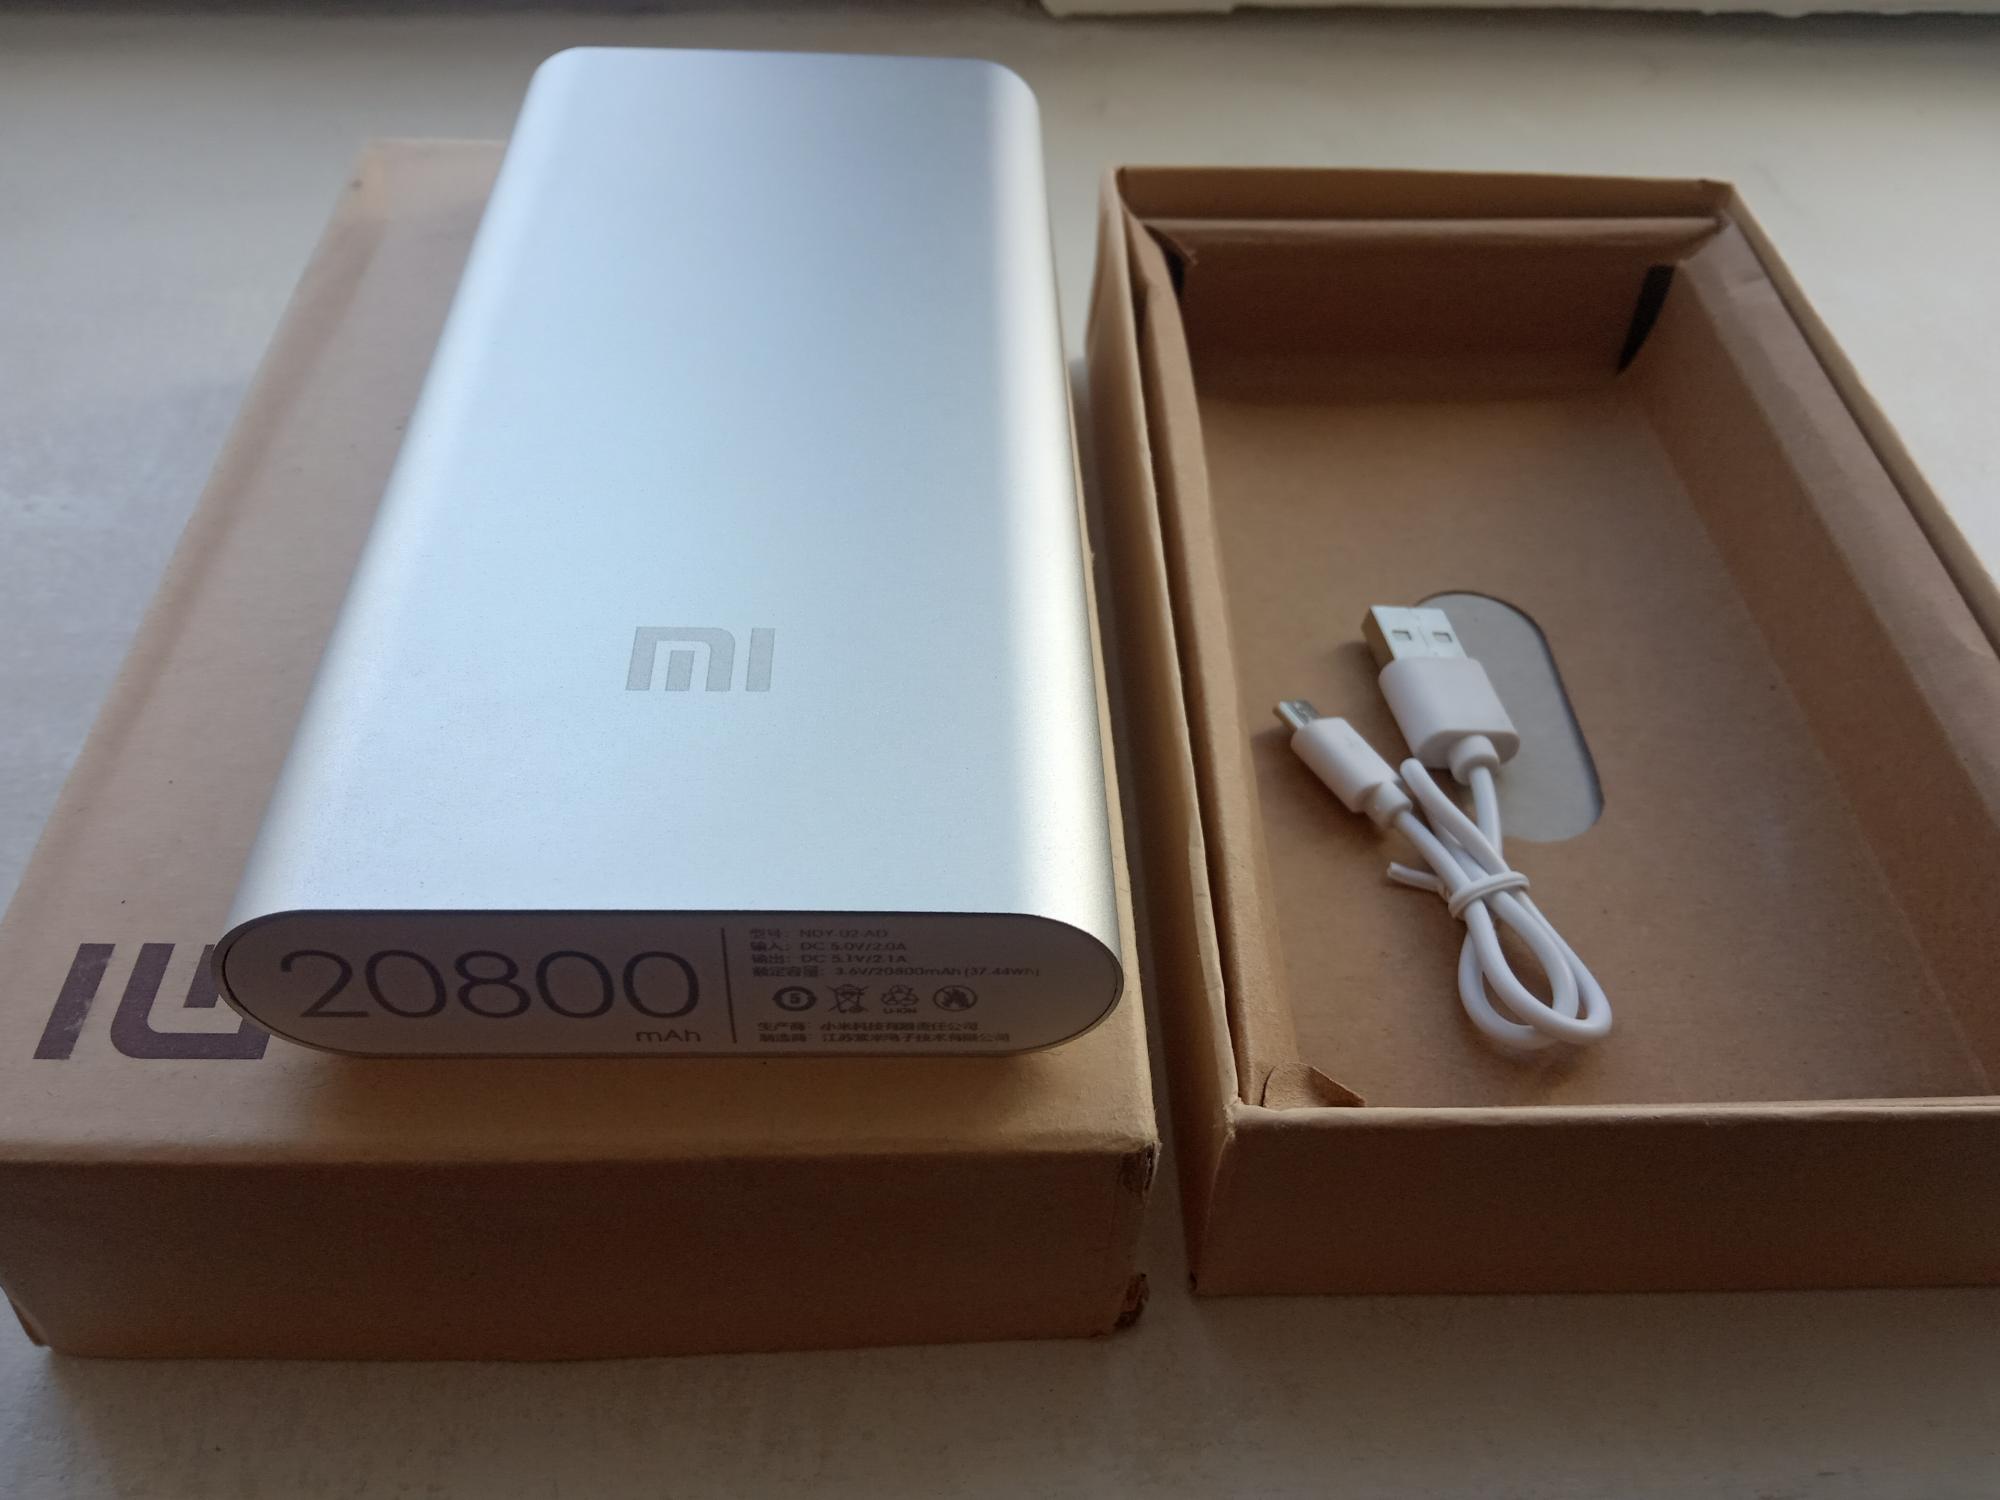 Xiaomi Power Bank 20800 Mah Купить